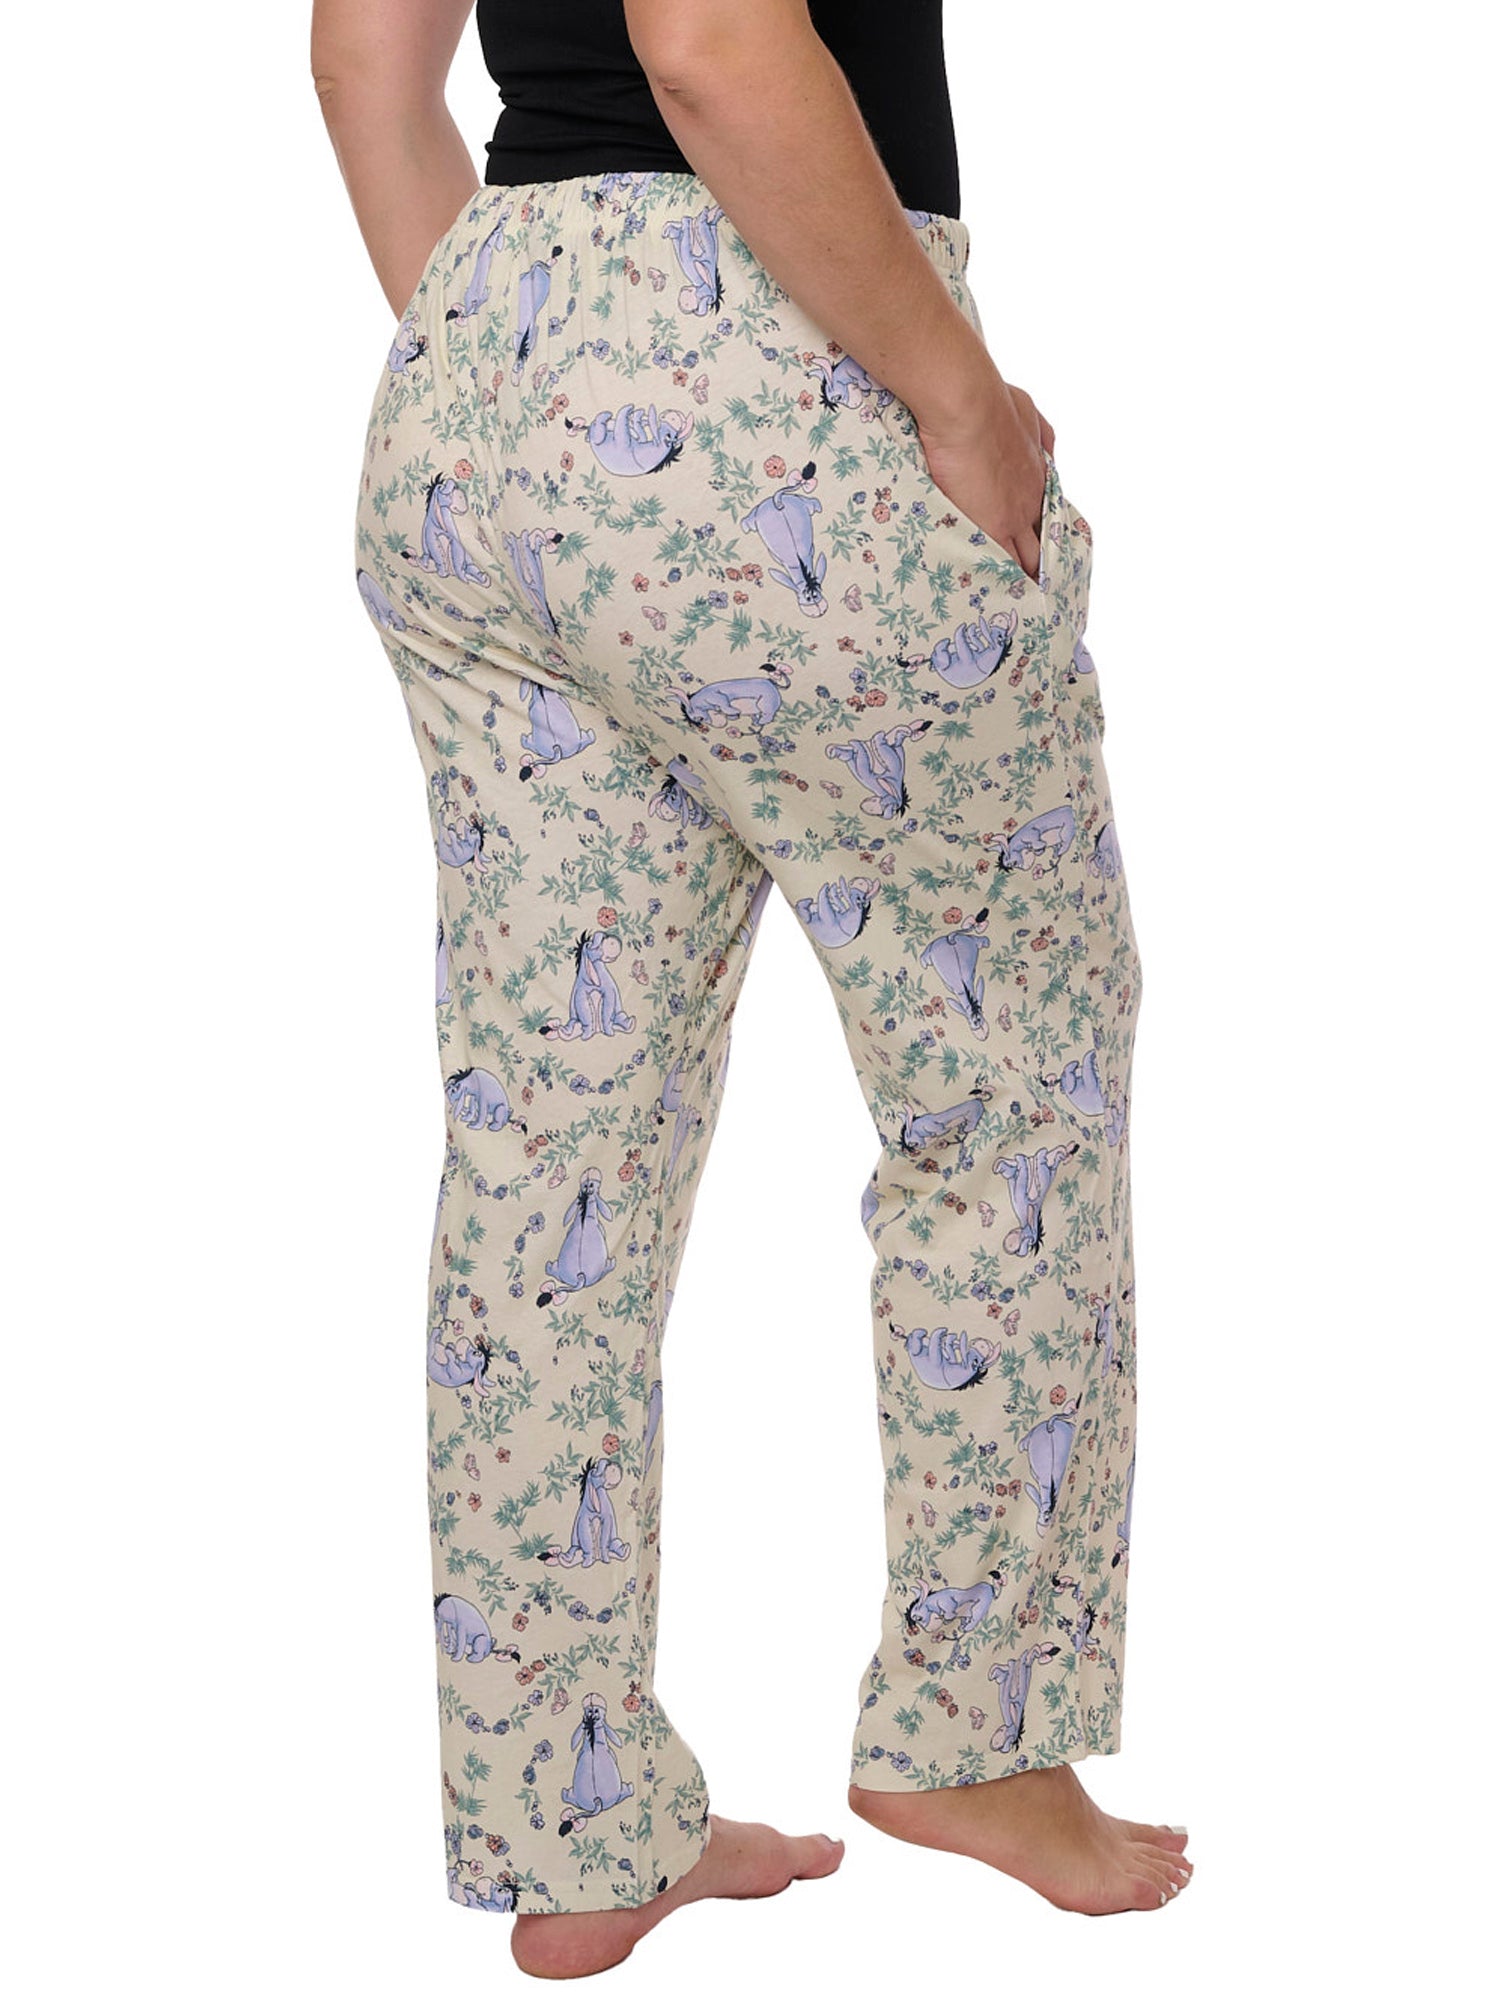 Disney Eeyore Pajama Pants Loungewear Watercolor Floral Womens Plus Size Cotton